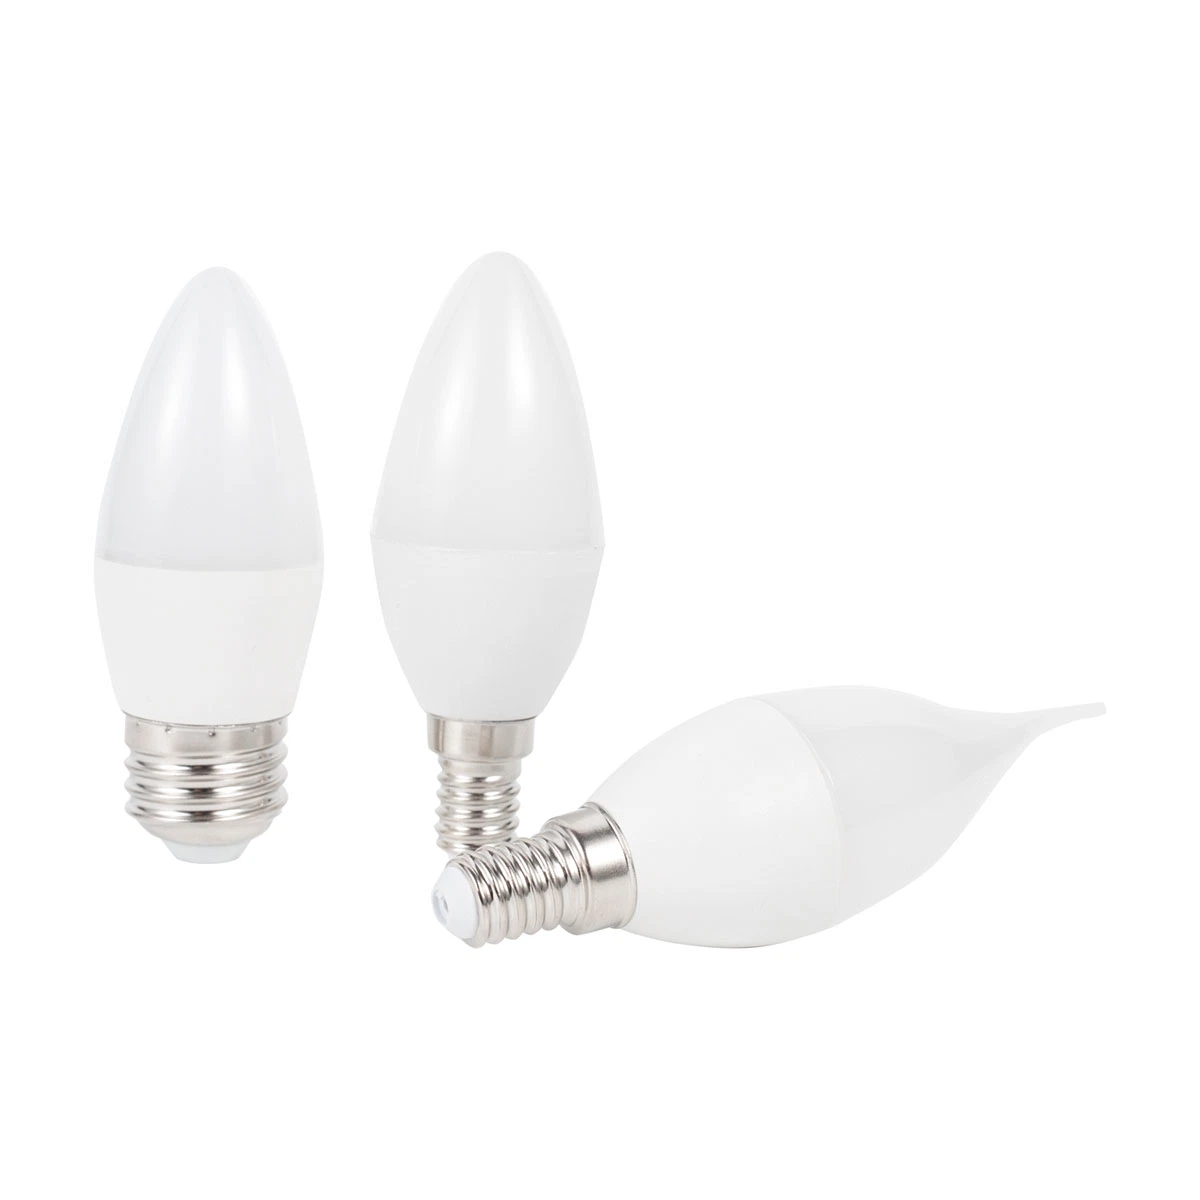 New LED Bulb Candle E14 LED Lamp LED Bulb Lamp 4W 5W 6W 8W for Home Lighting